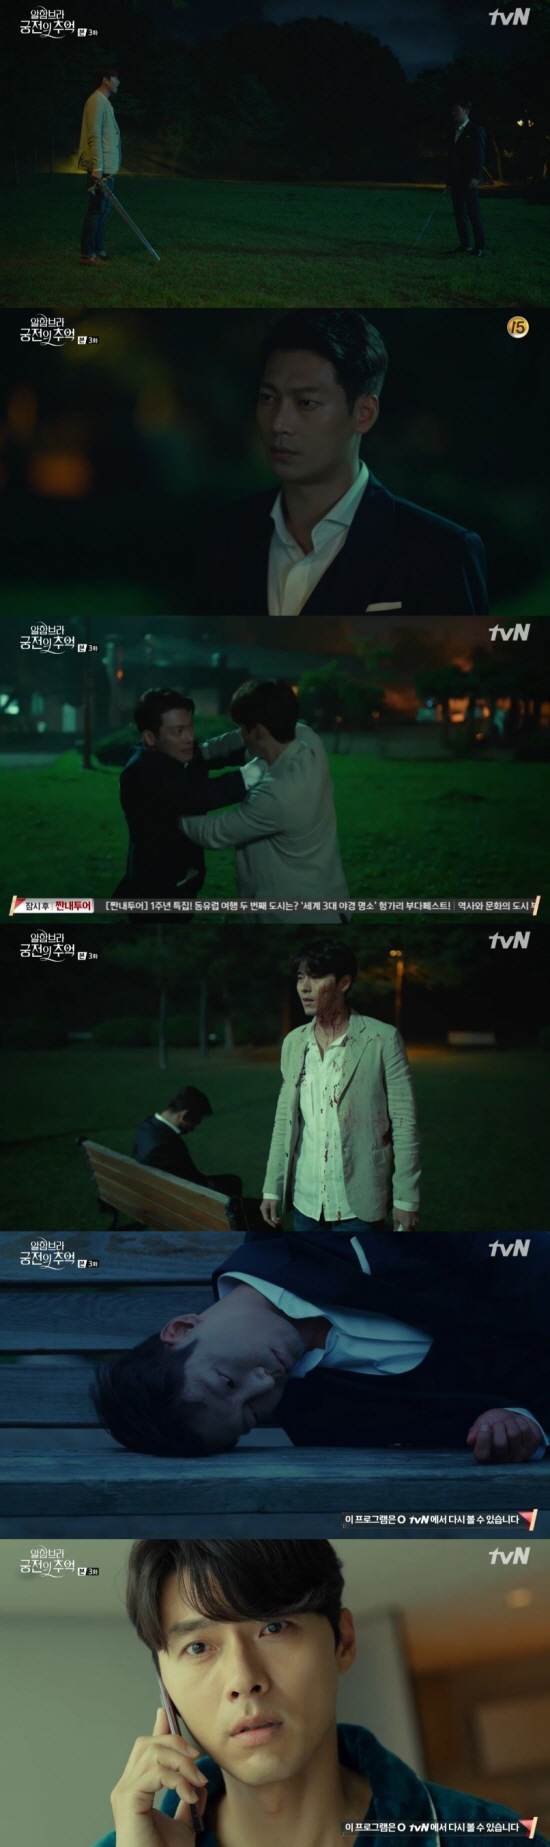 tvN ‘알함브라 궁전의 추억’ 방송화면 캡처